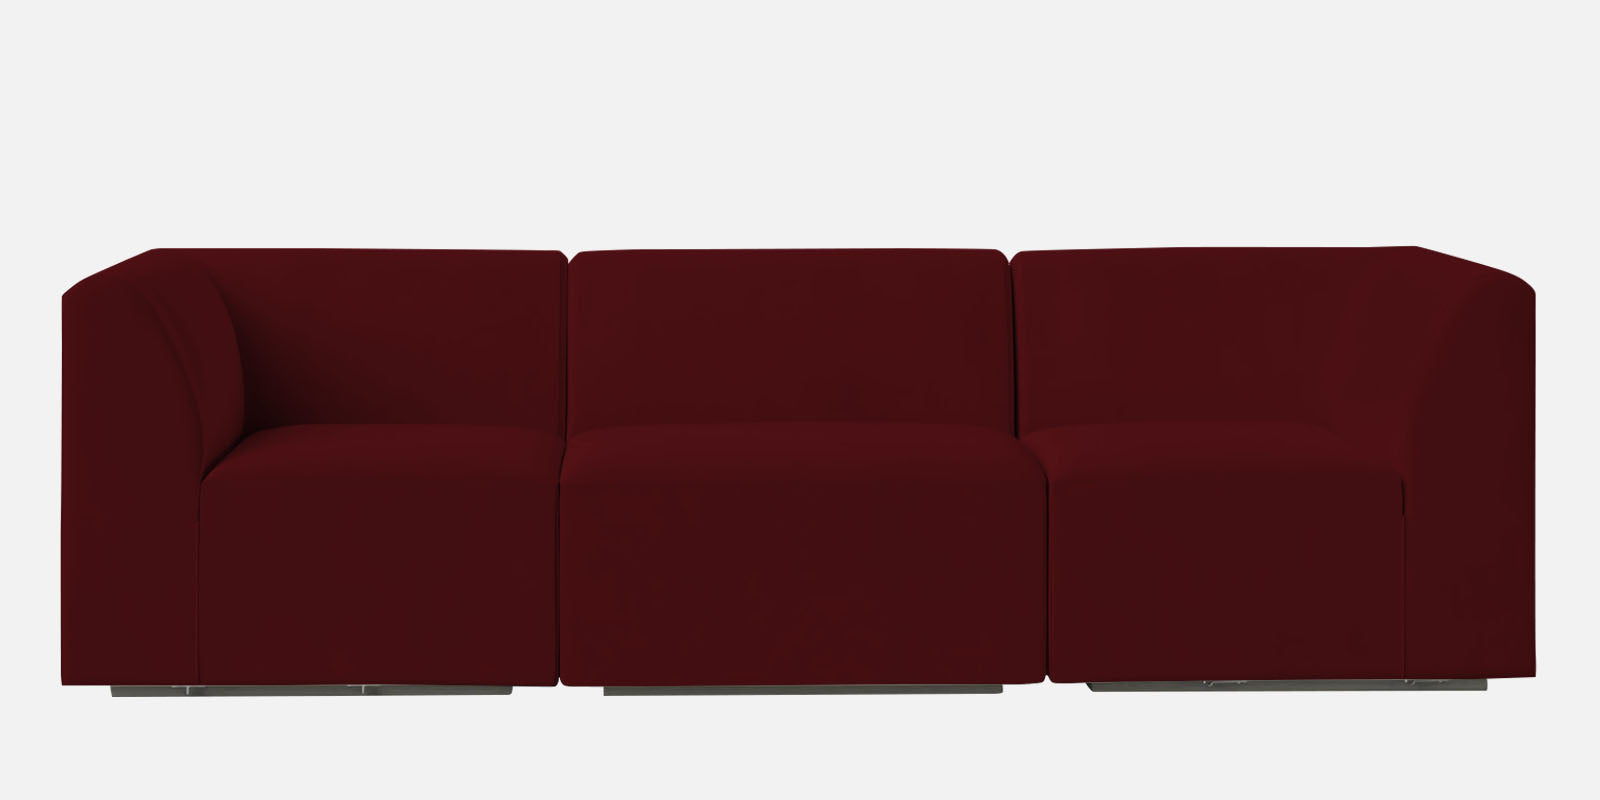 Bufa Velvet 3 Seater Sofa in Dark Maroon Colour